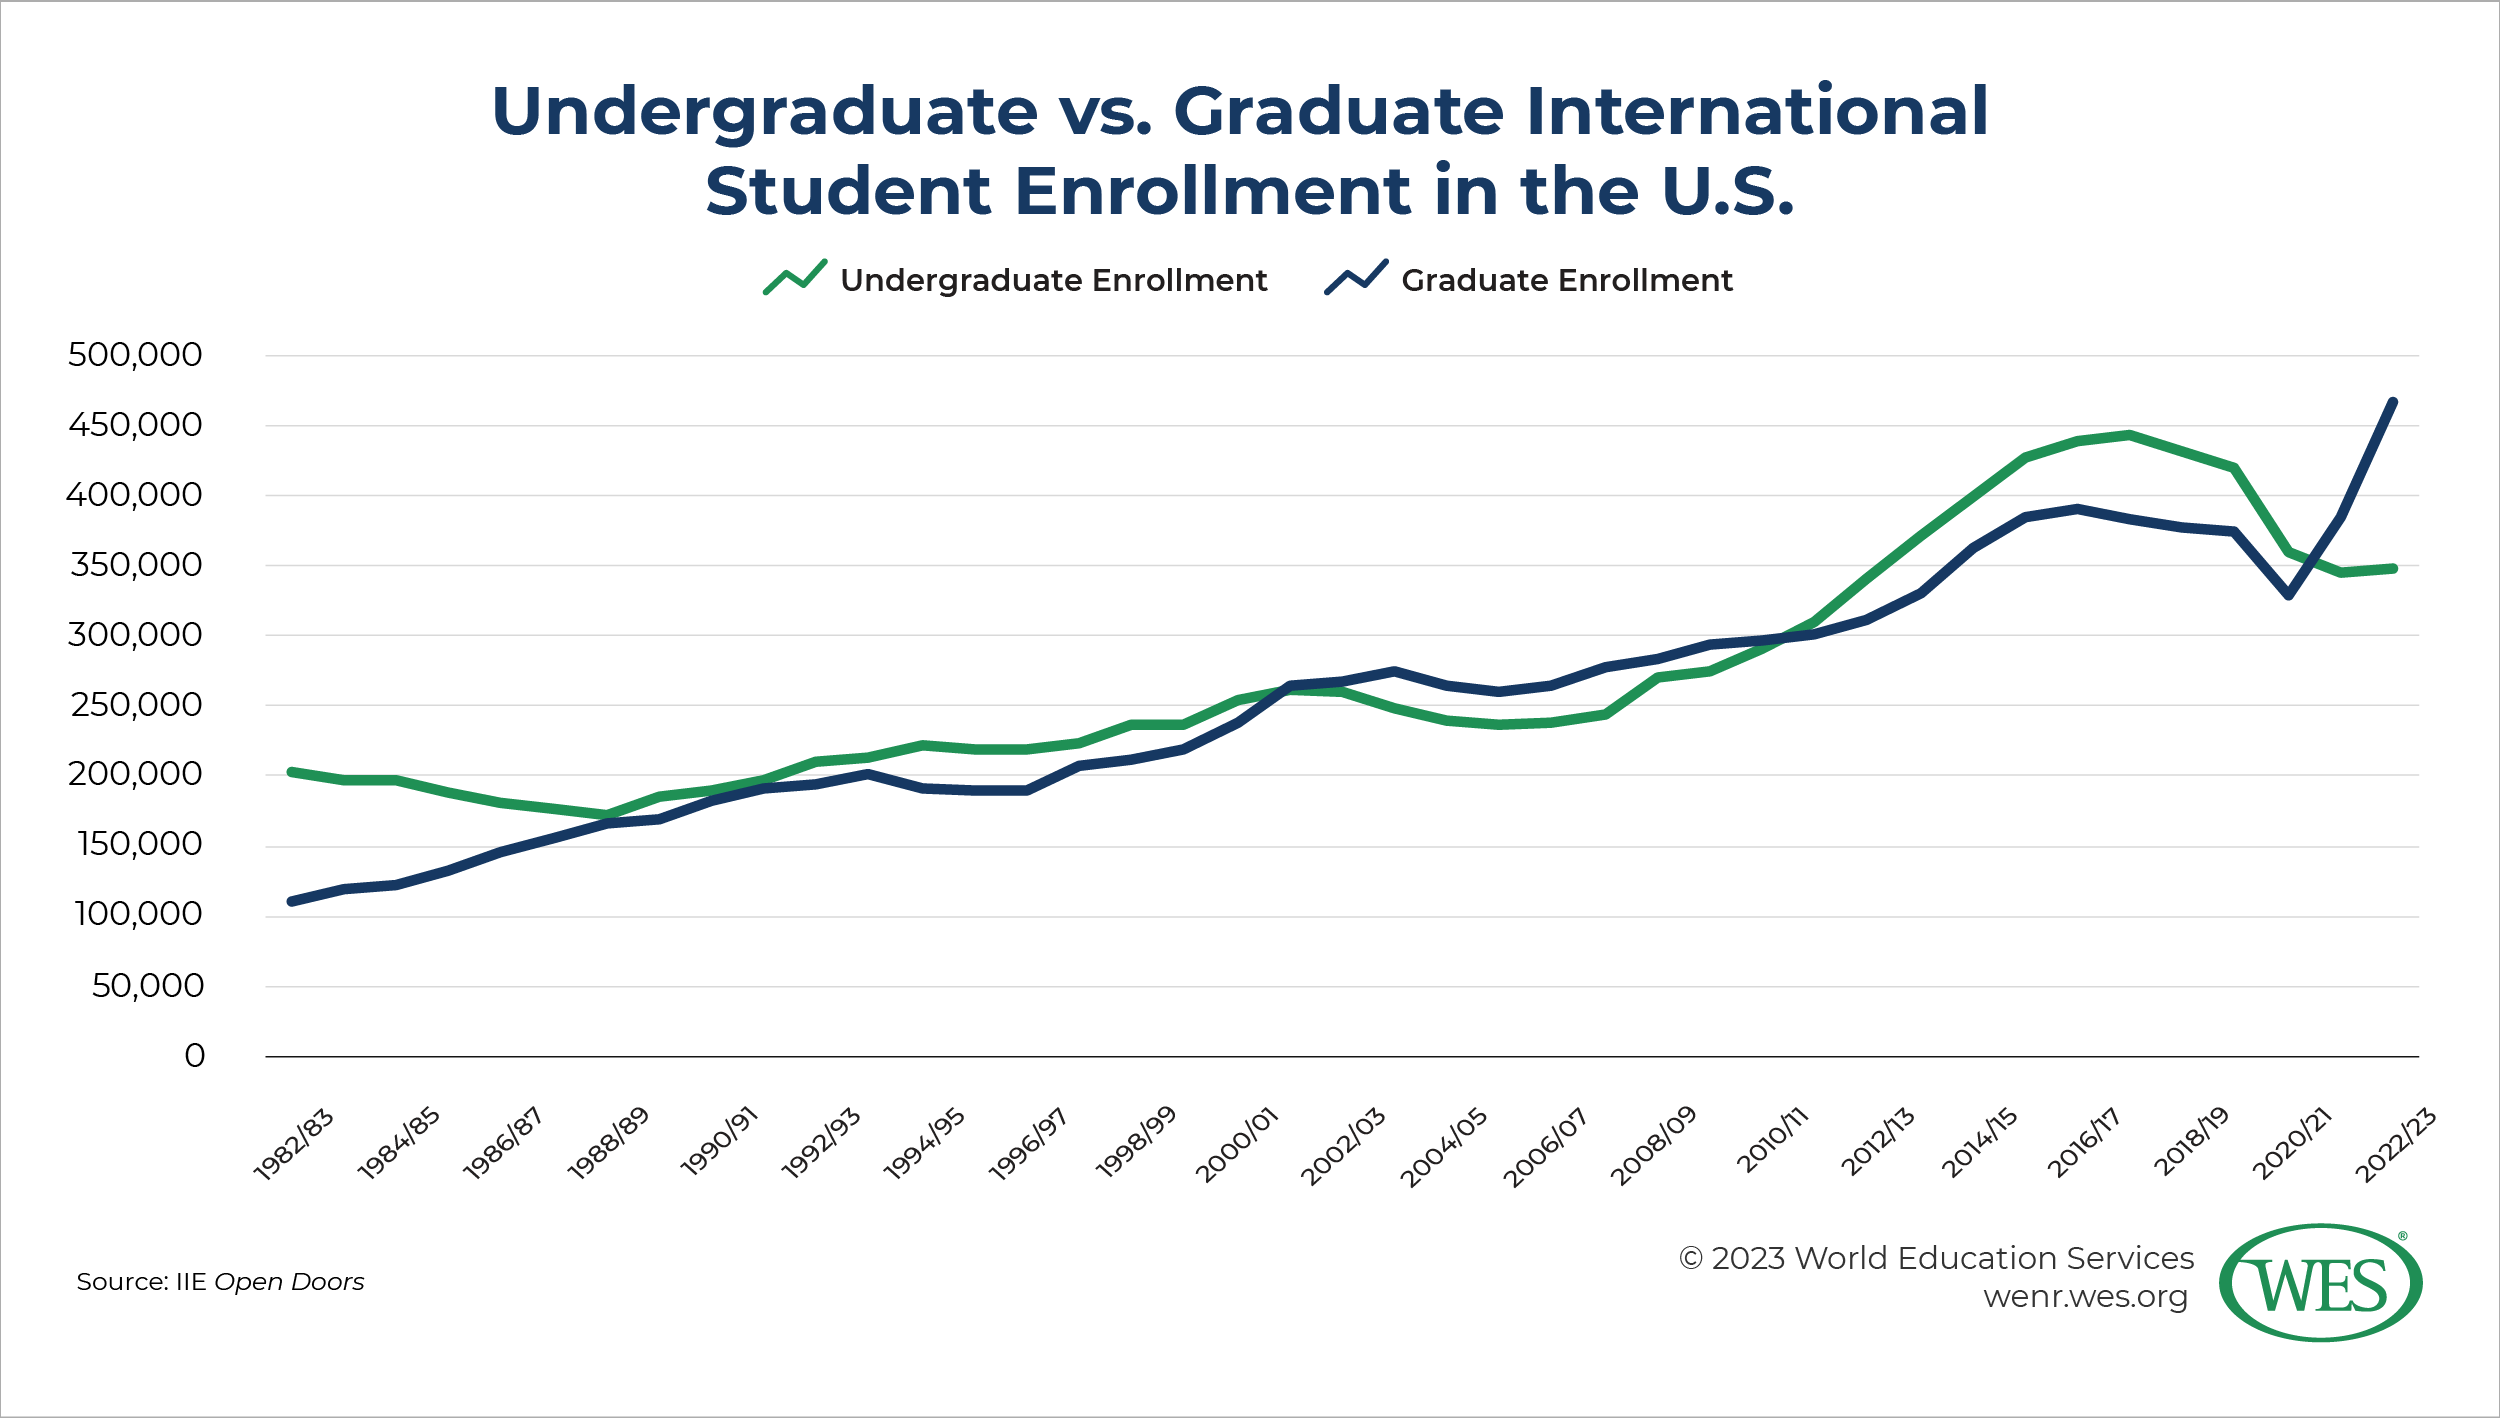 A chart showing undergraduate versus graduate international student enrollment in the U.S. between 1982/83 and 2022/23. 